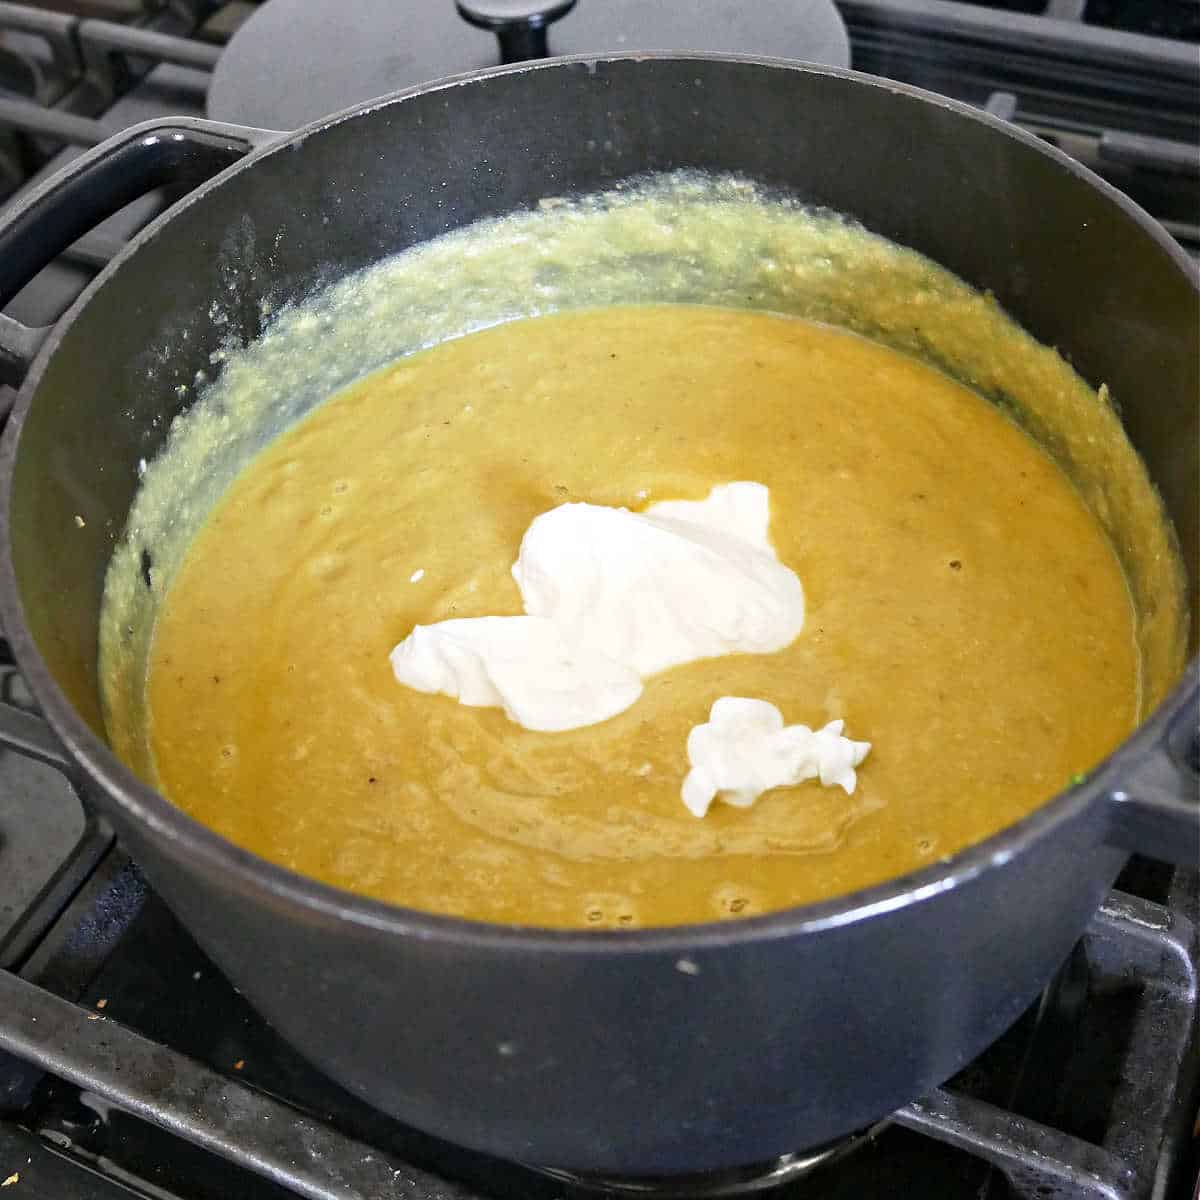 Greek yogurt being added to blended jalapeño soup in a soup pot